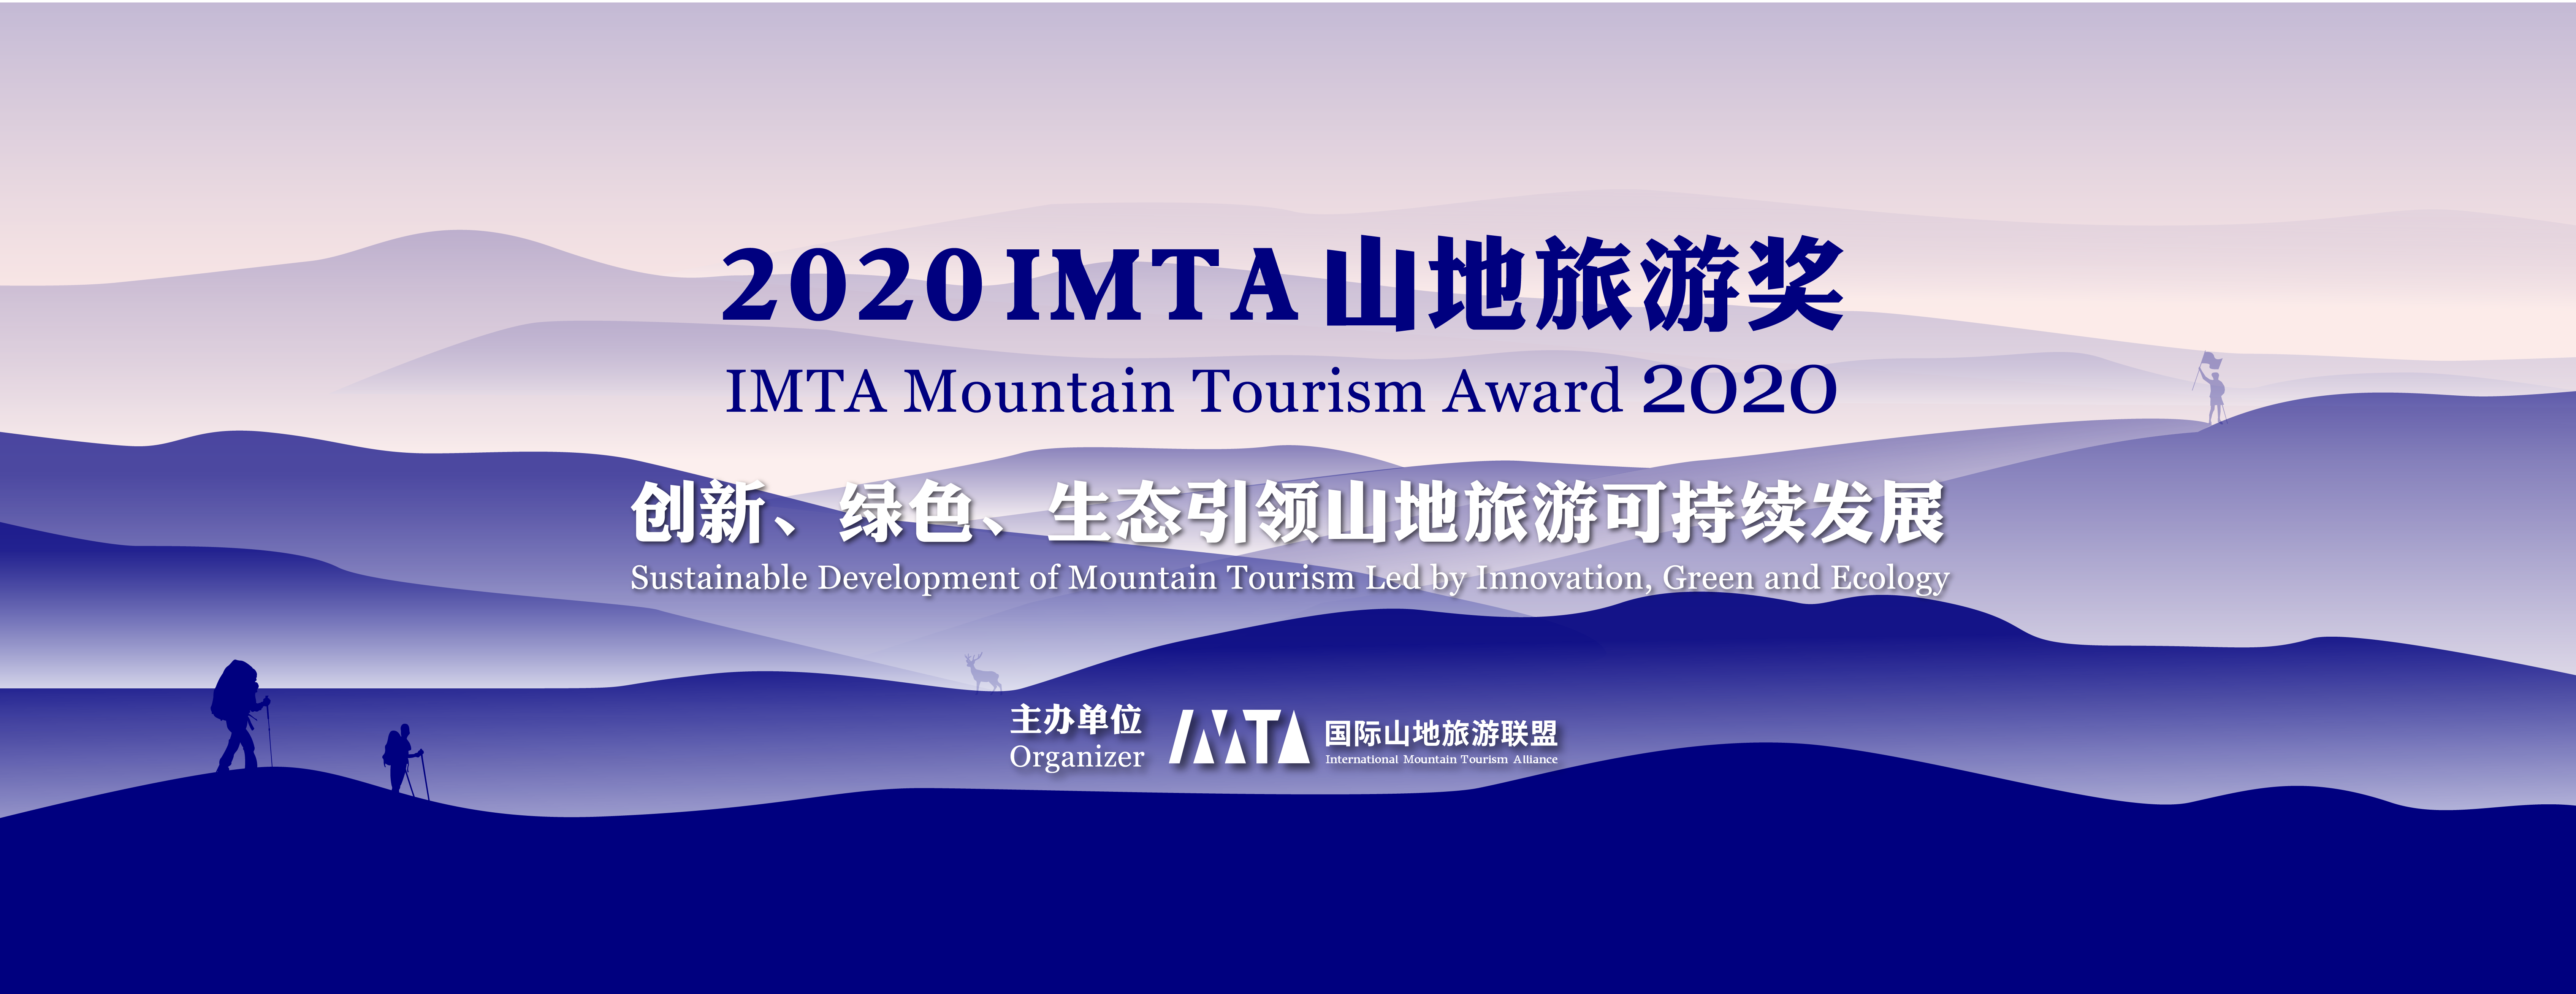 2020“IMTA山地旅游奖”征集评选活动入围名单公示